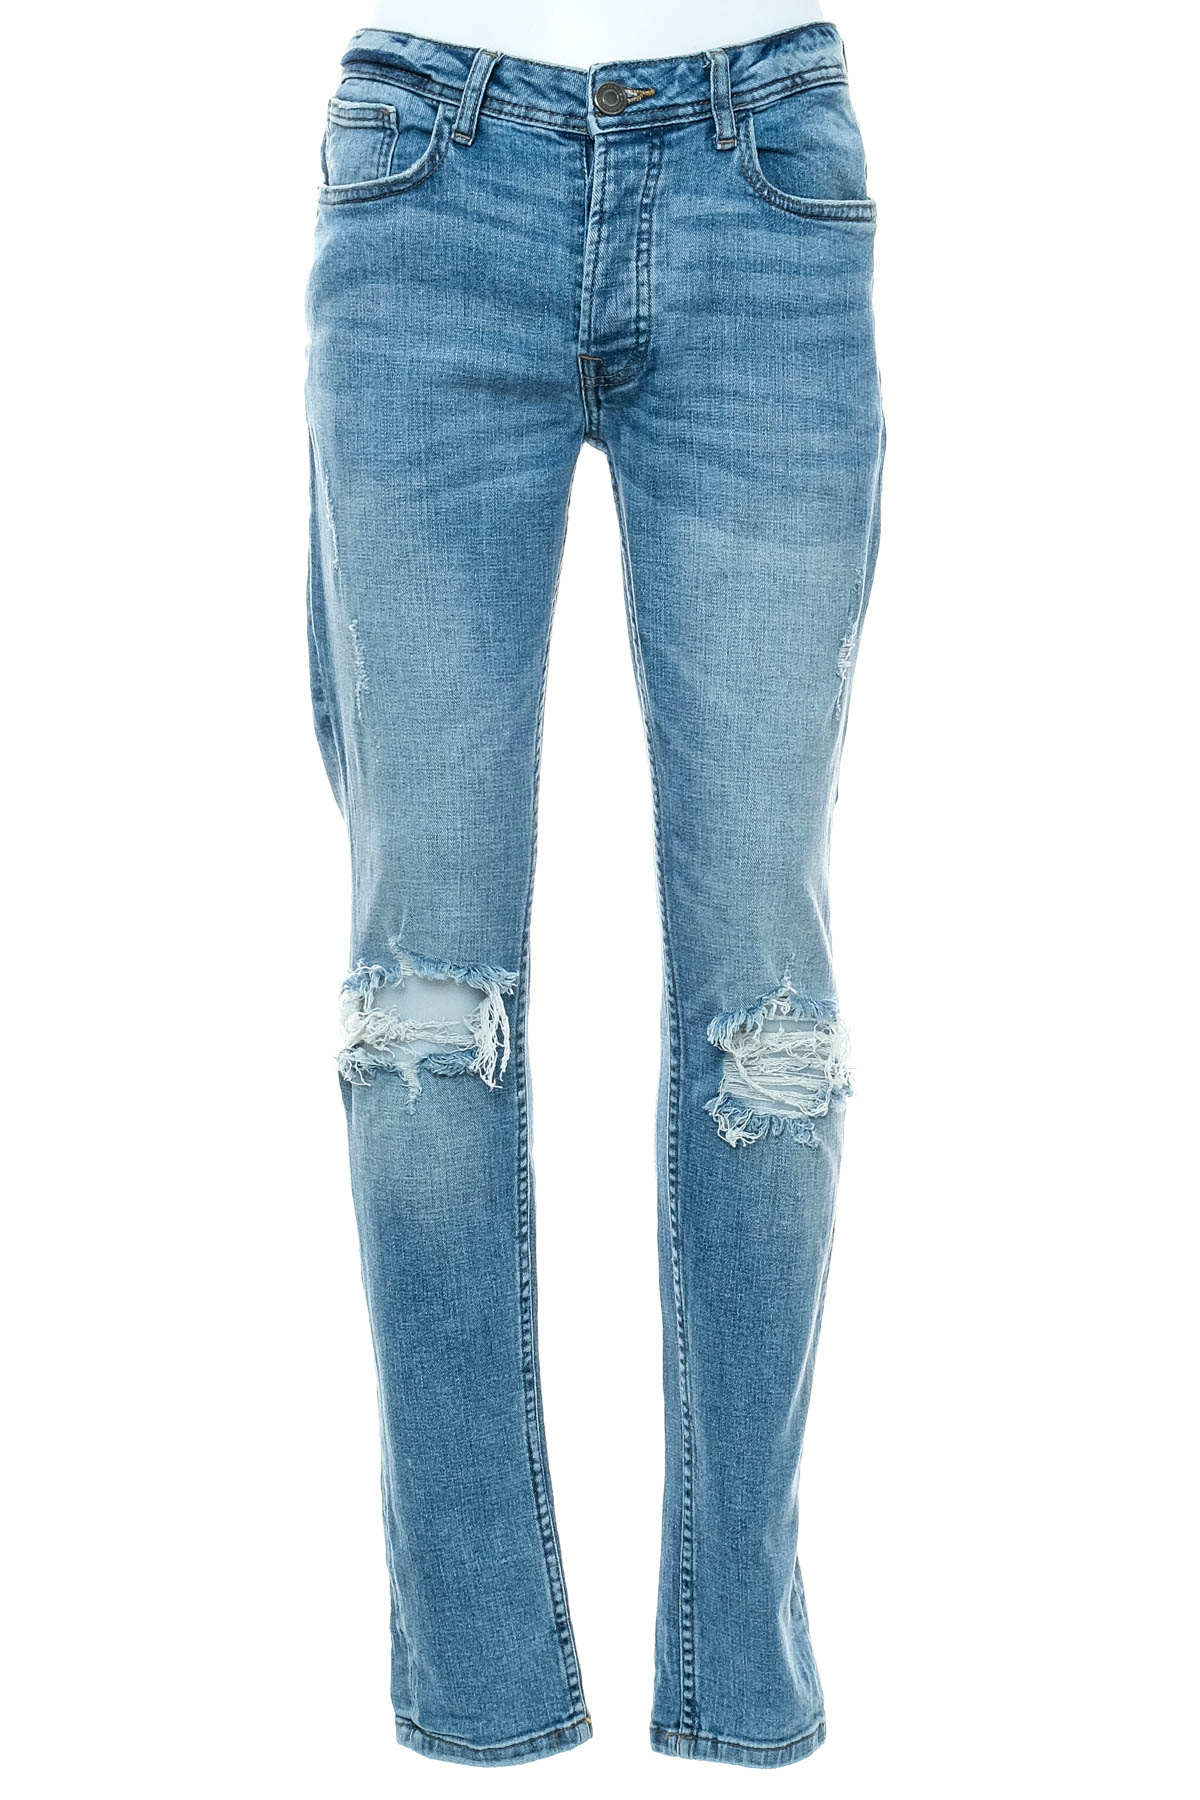 Men's jeans - Denim Co. - 0